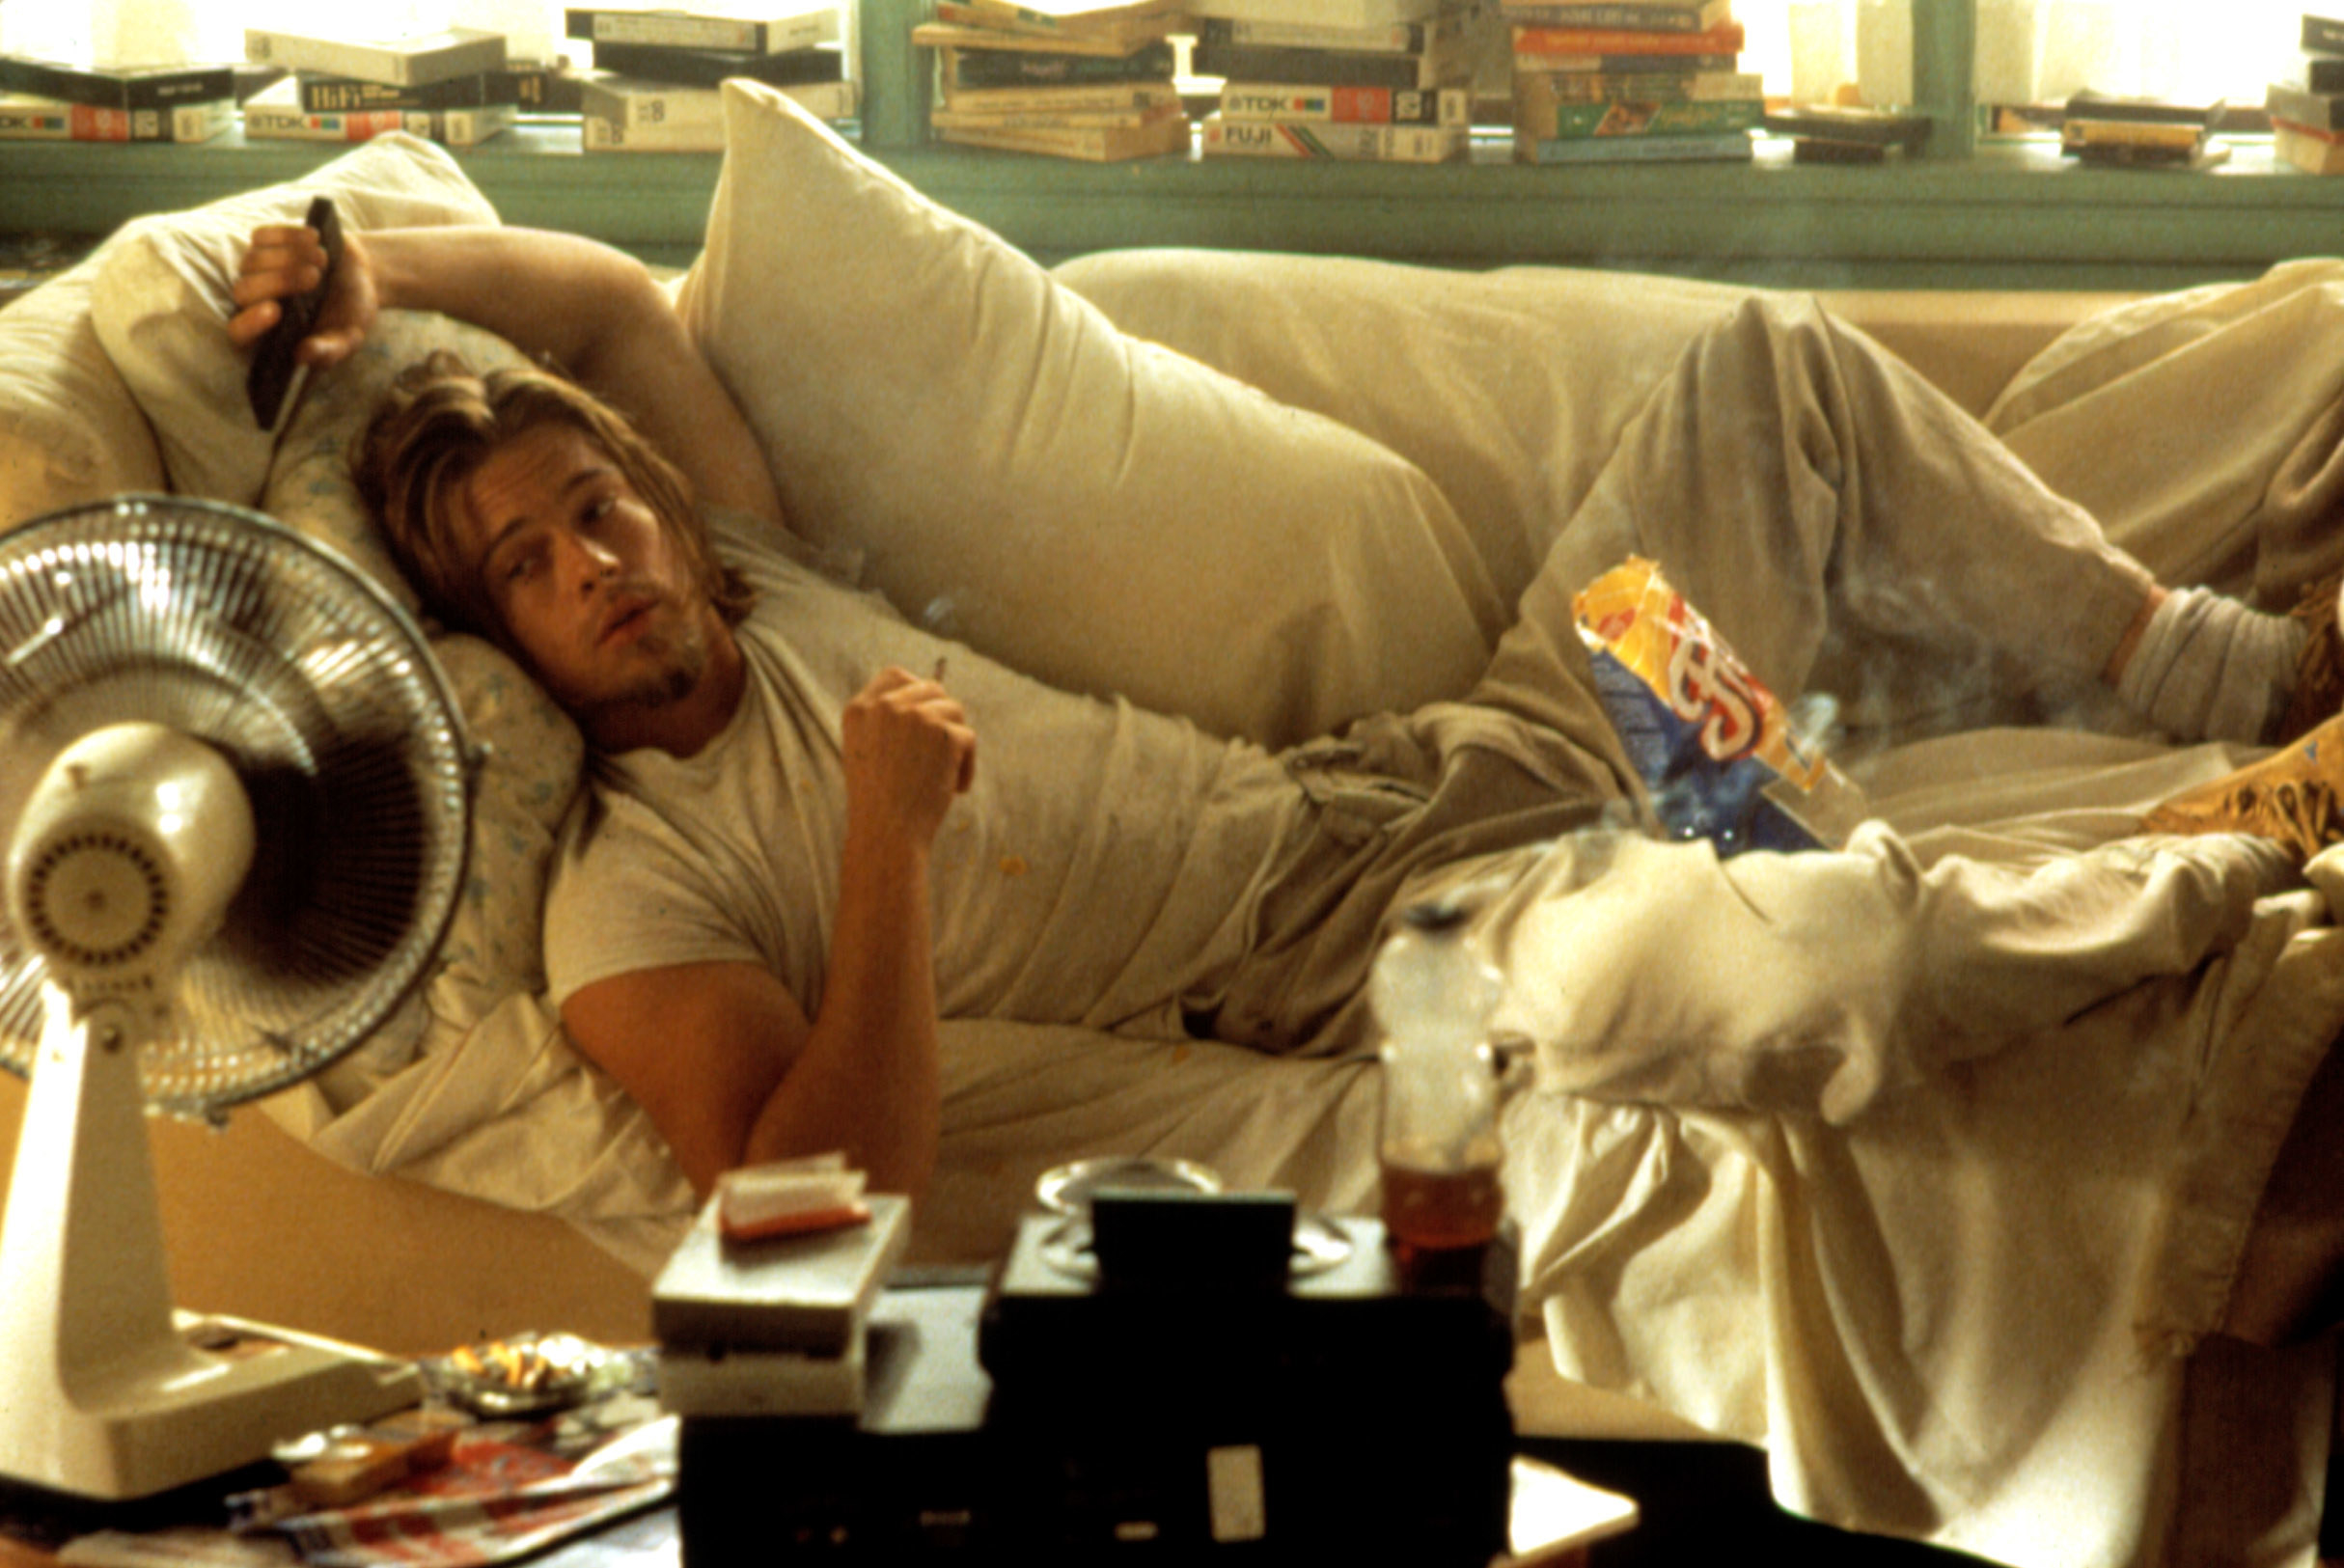 Brad Pitt as a stoner, lying on a sofa eating Fritos